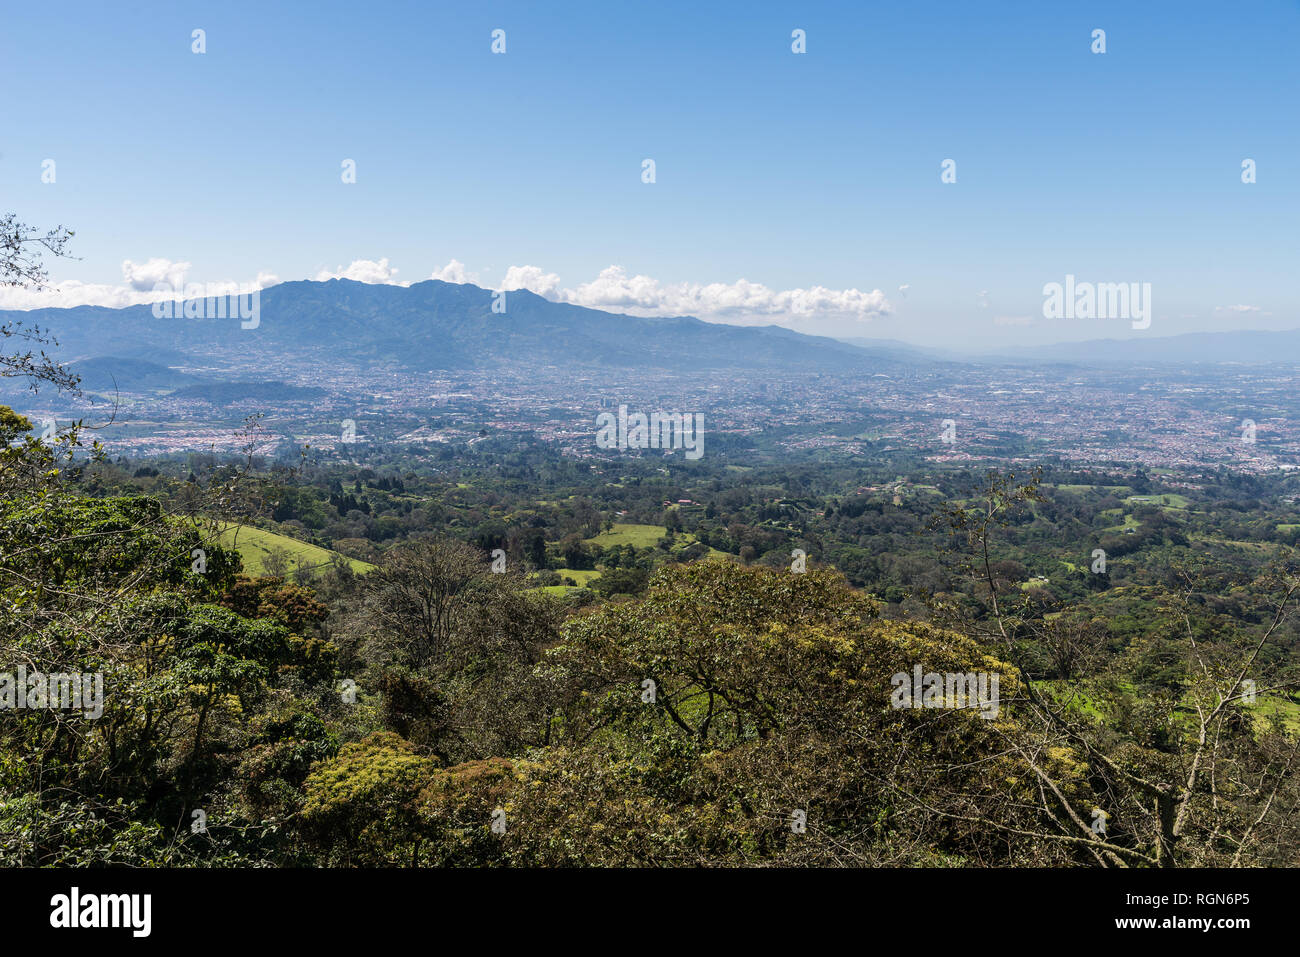 Urban sprawl of the city San Jose at the foot of Irazu Volcano, Costa Rica. Stock Photo